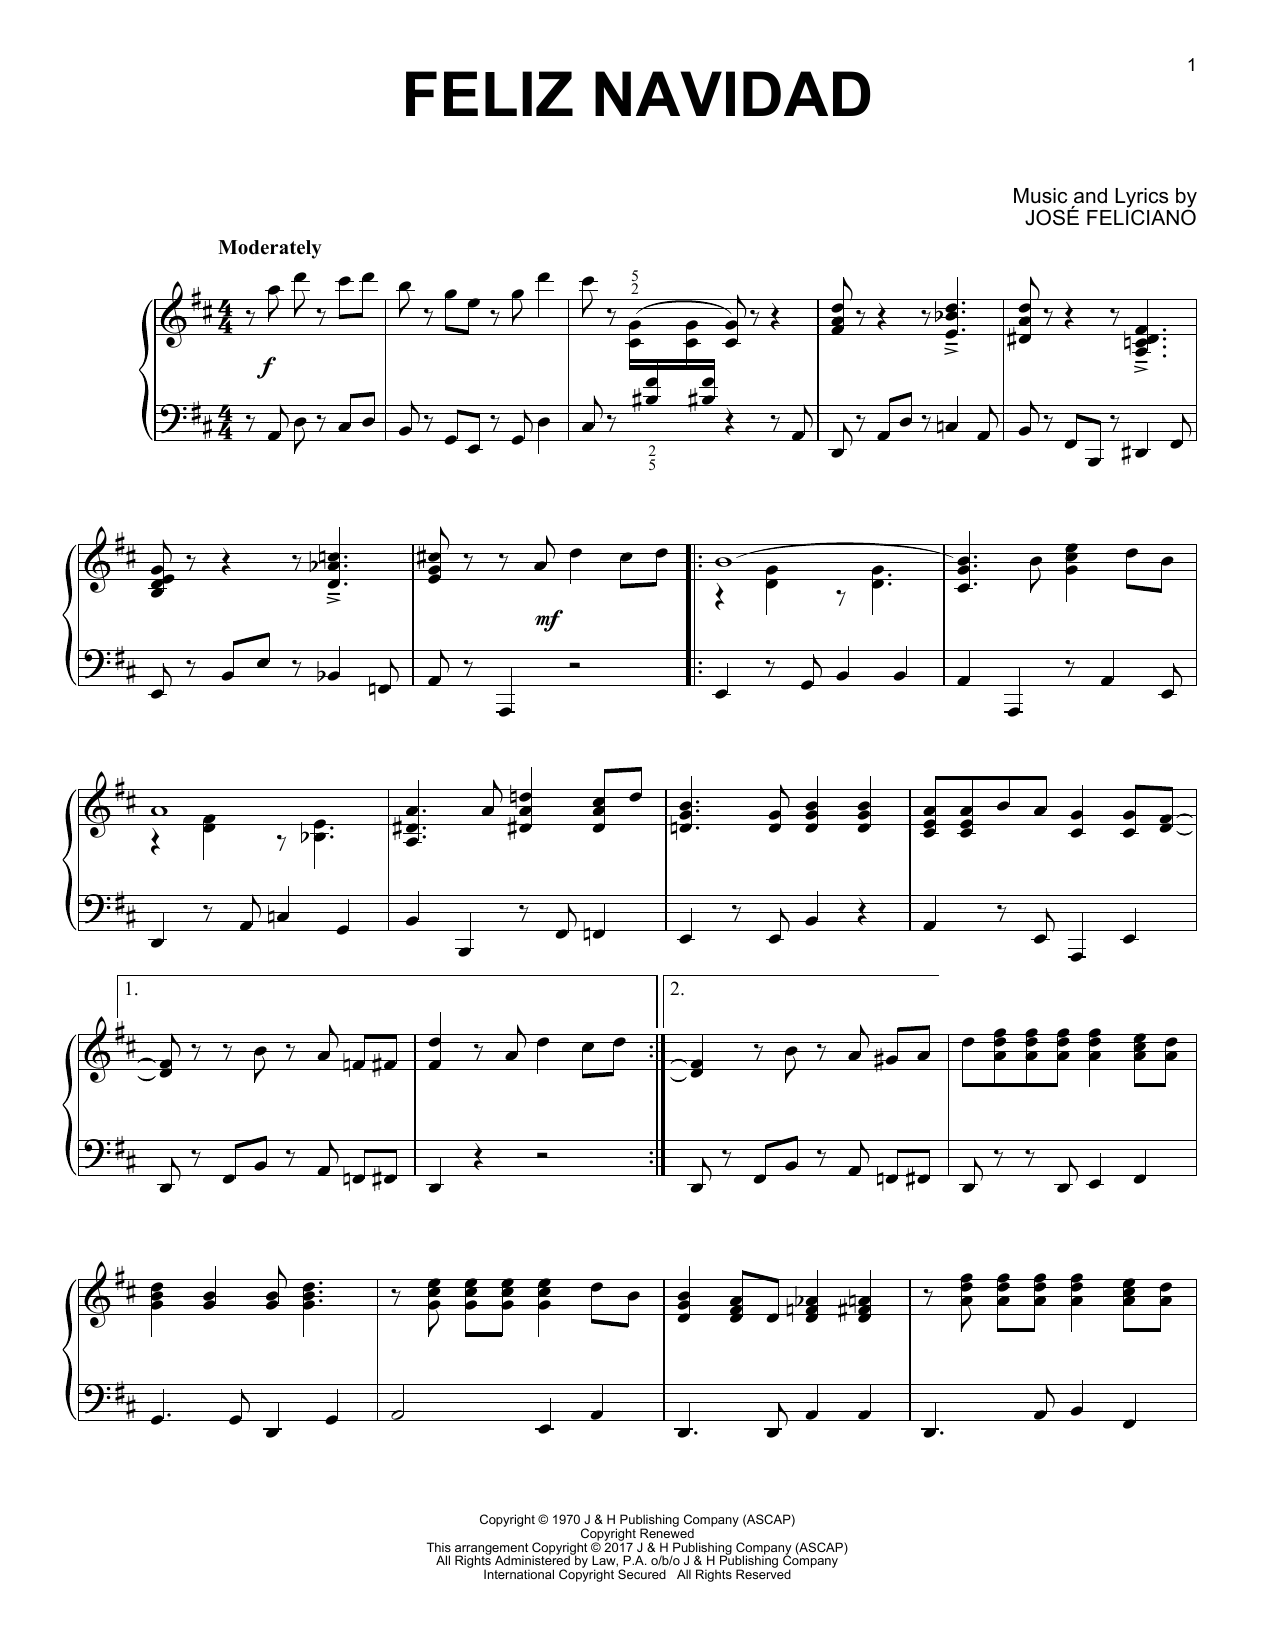 Jose Feliciano Feliz Navidad [Jazz version] Sheet Music Notes & Chords for Piano - Download or Print PDF